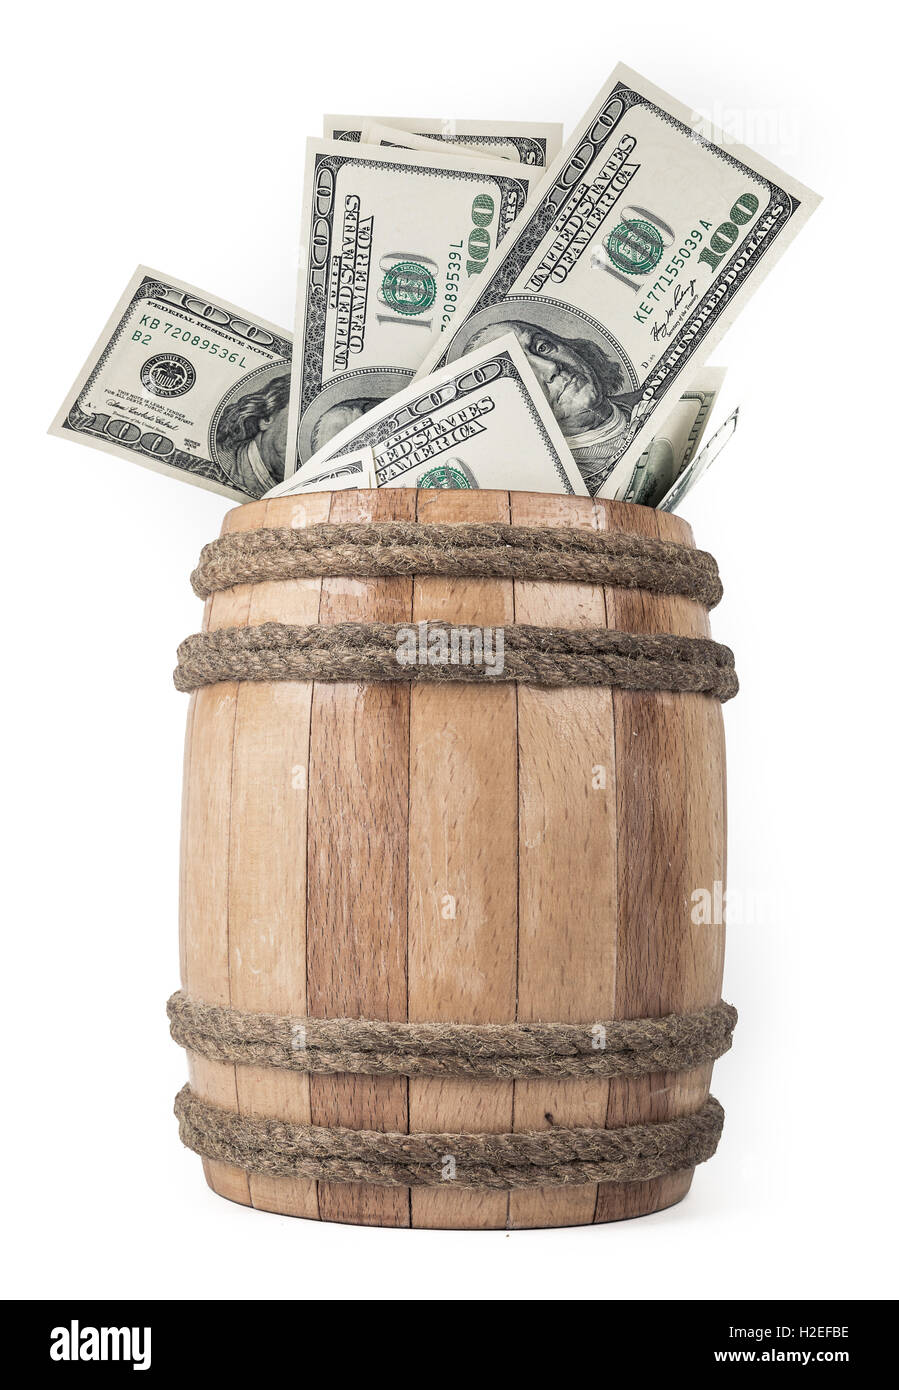 Wooden barrel with hundred dollar bills Stock Photo